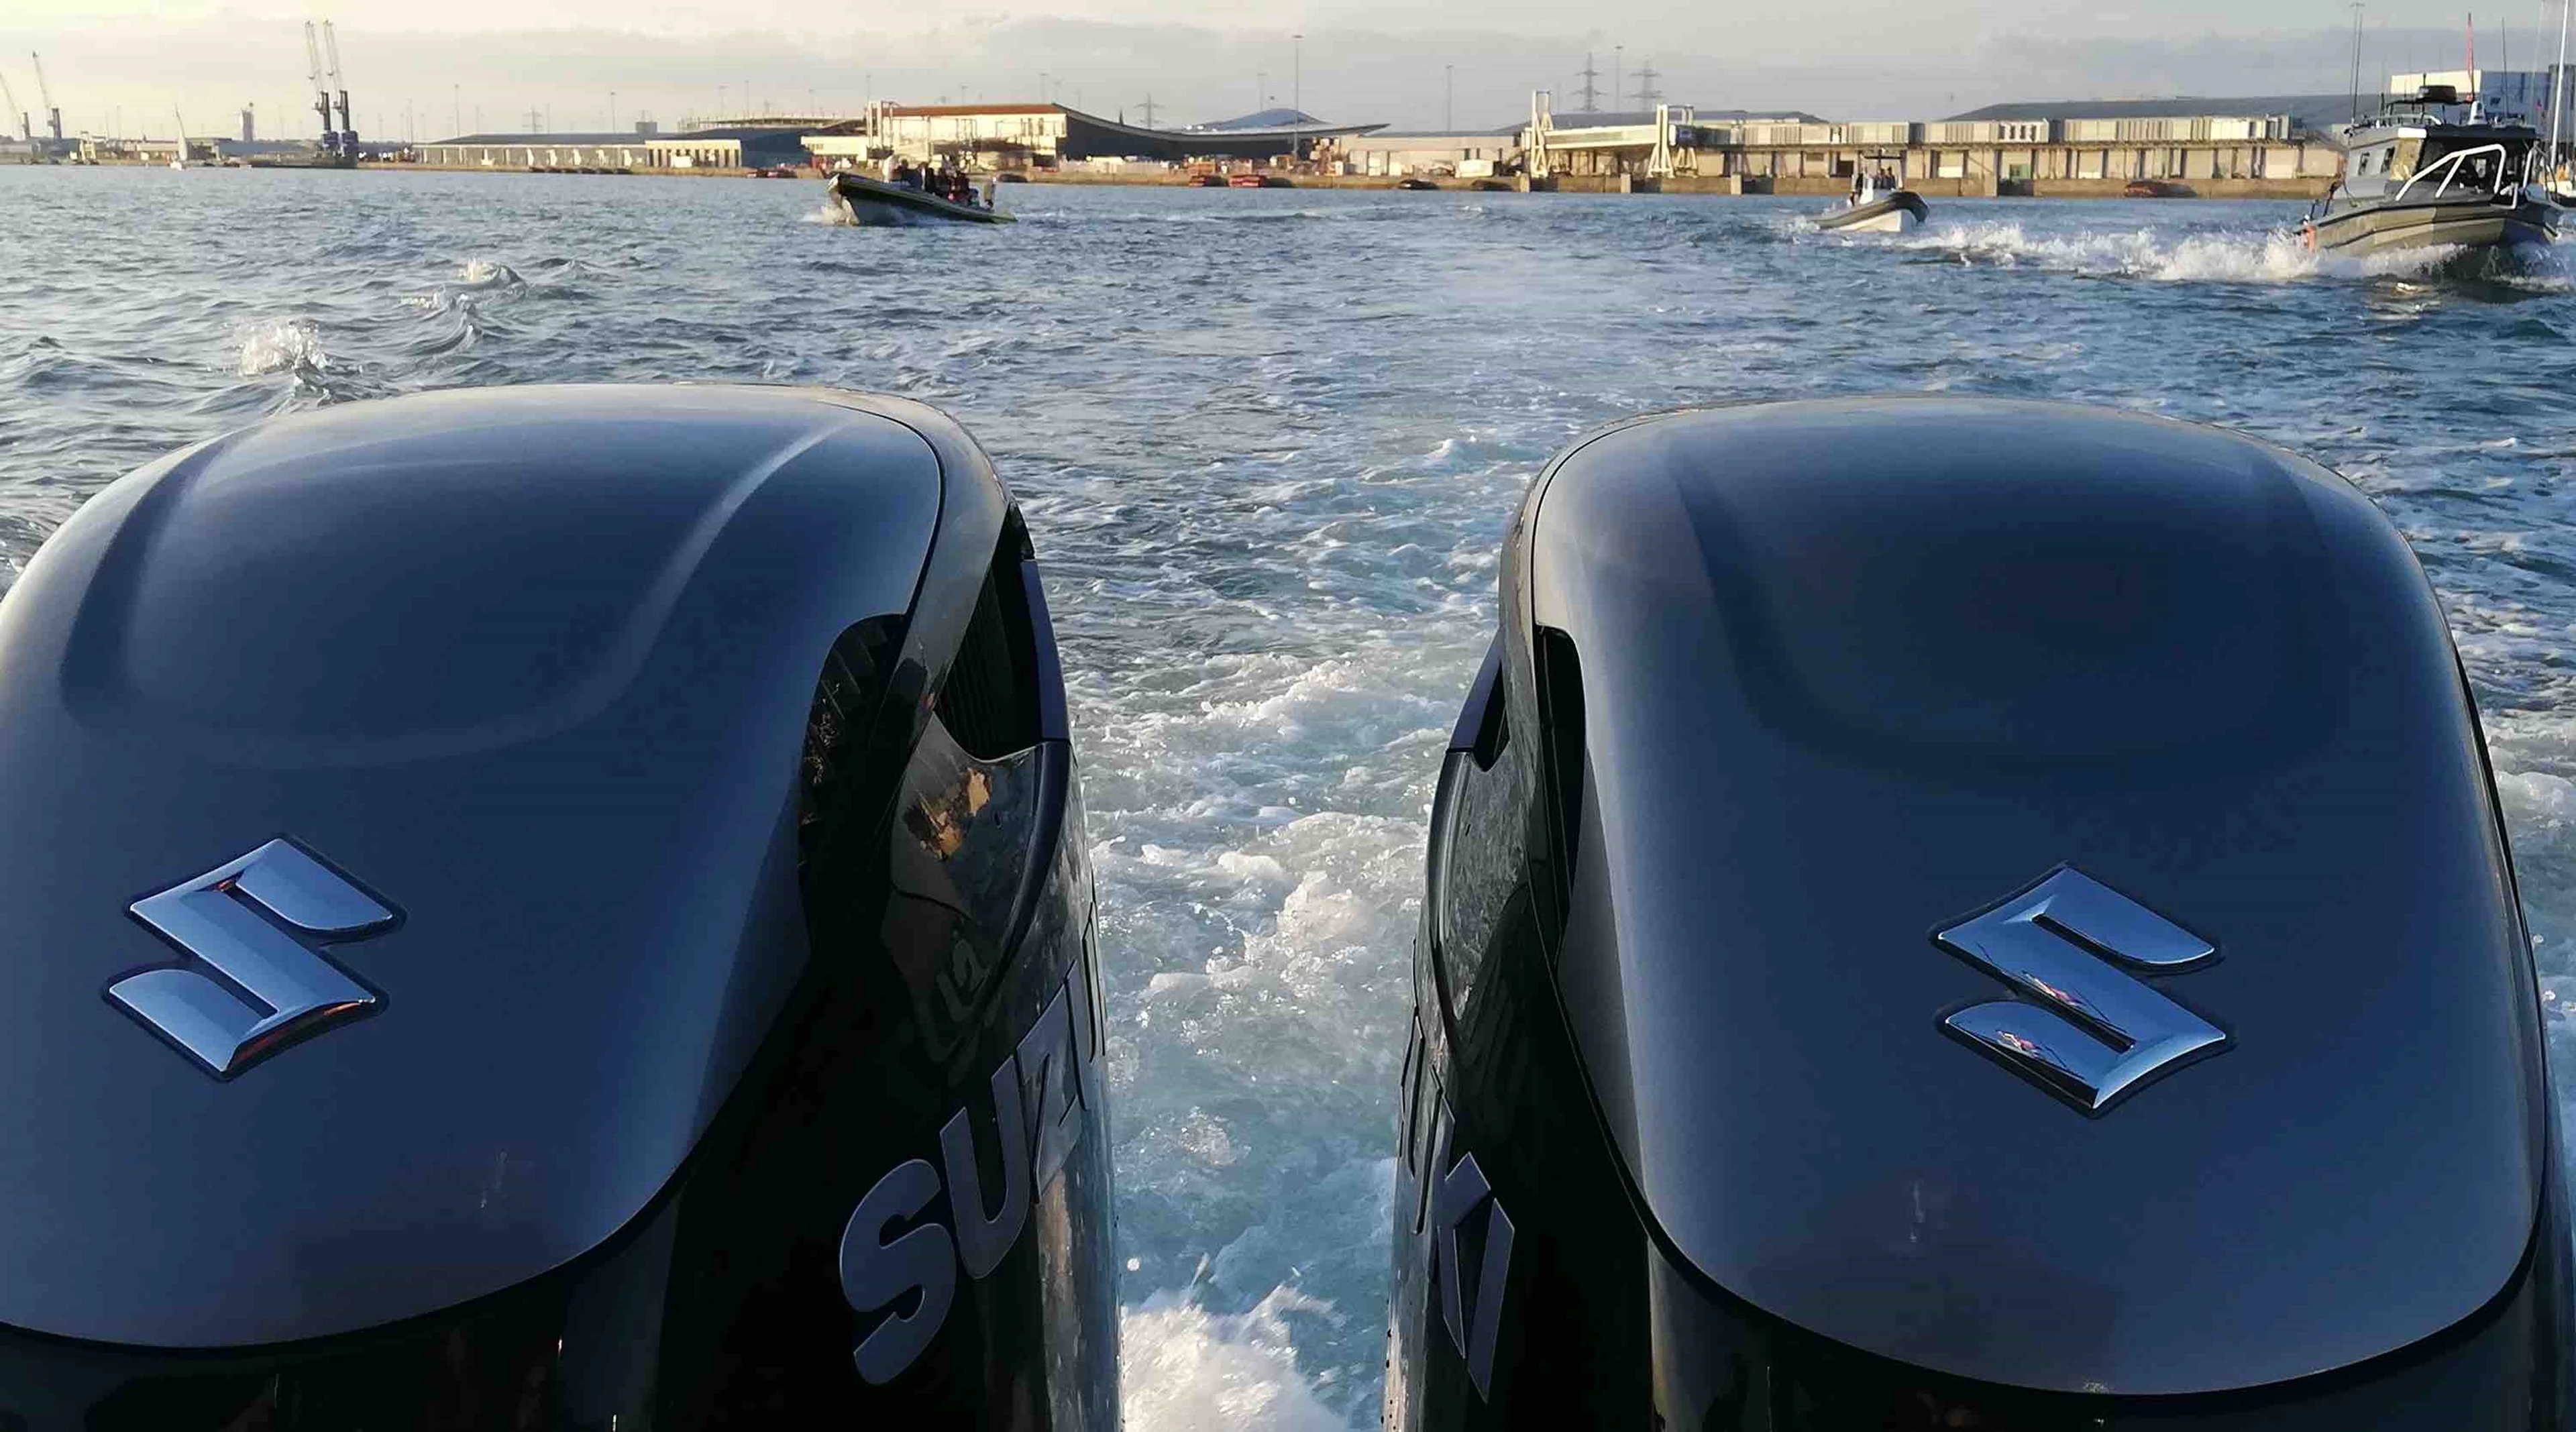 Two Suzuki outboards